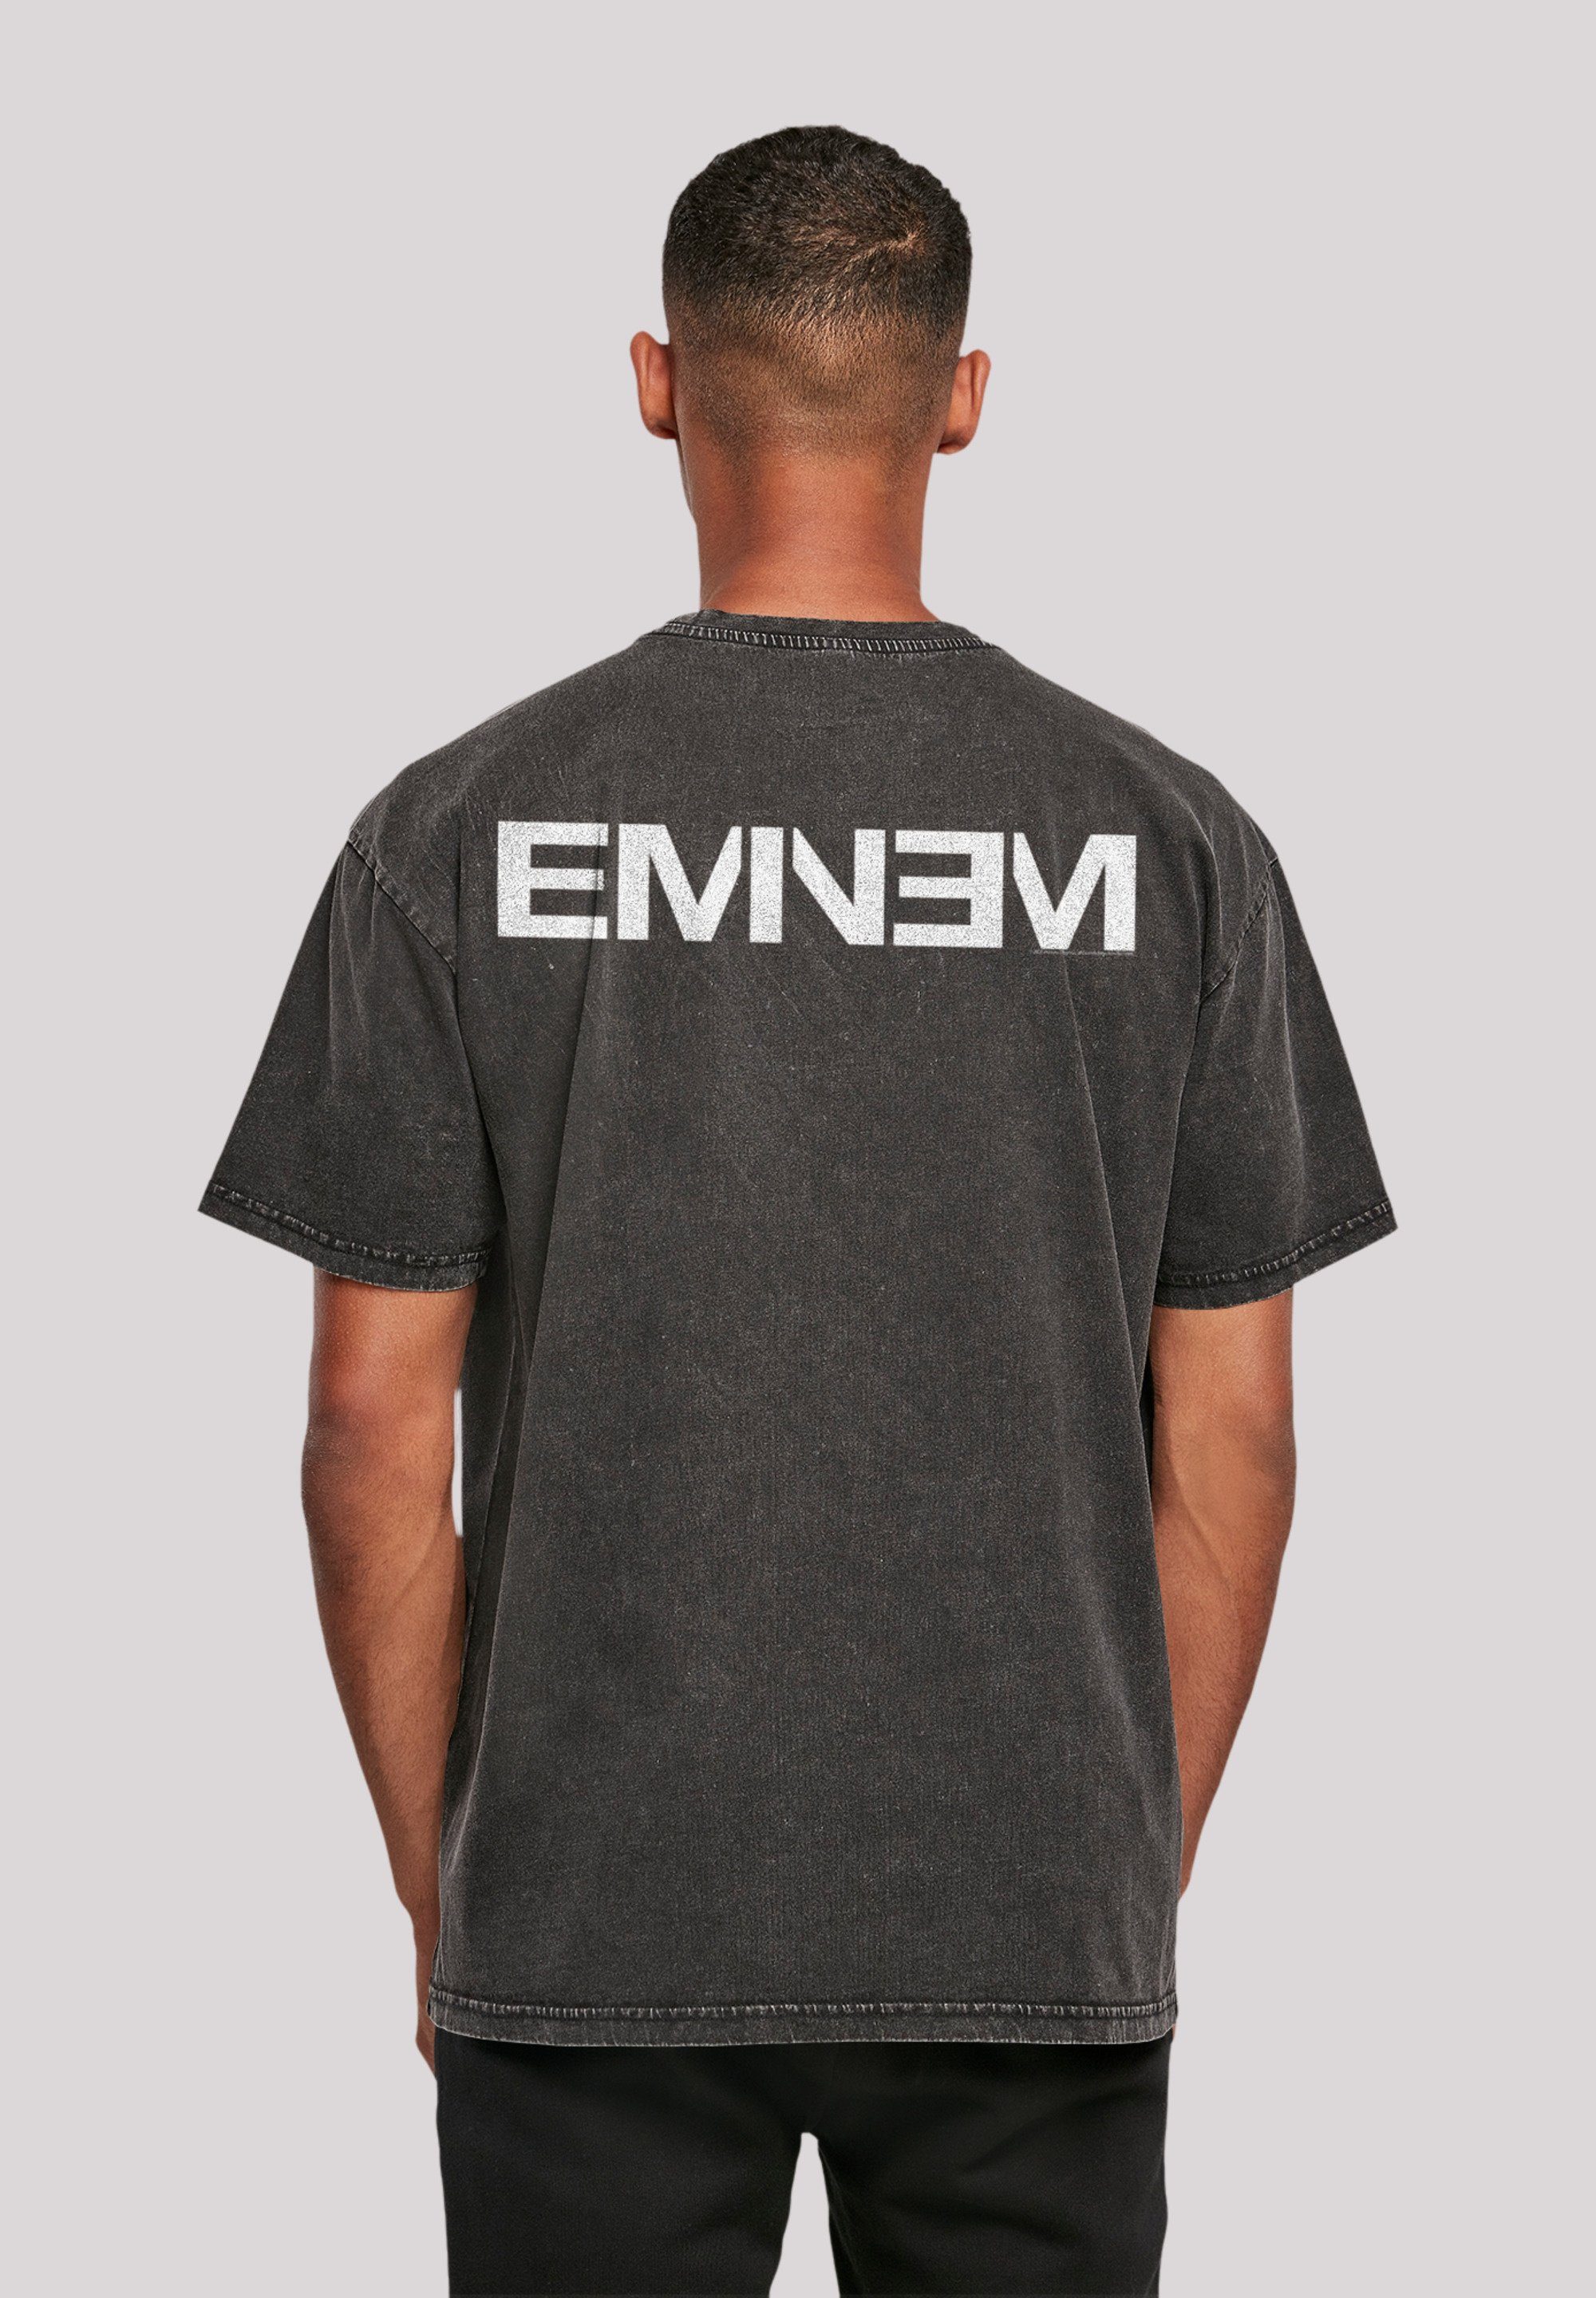 F4NT4STIC T-Shirt Eminem Hip Hop Rap Music Premium Qualität, Musik